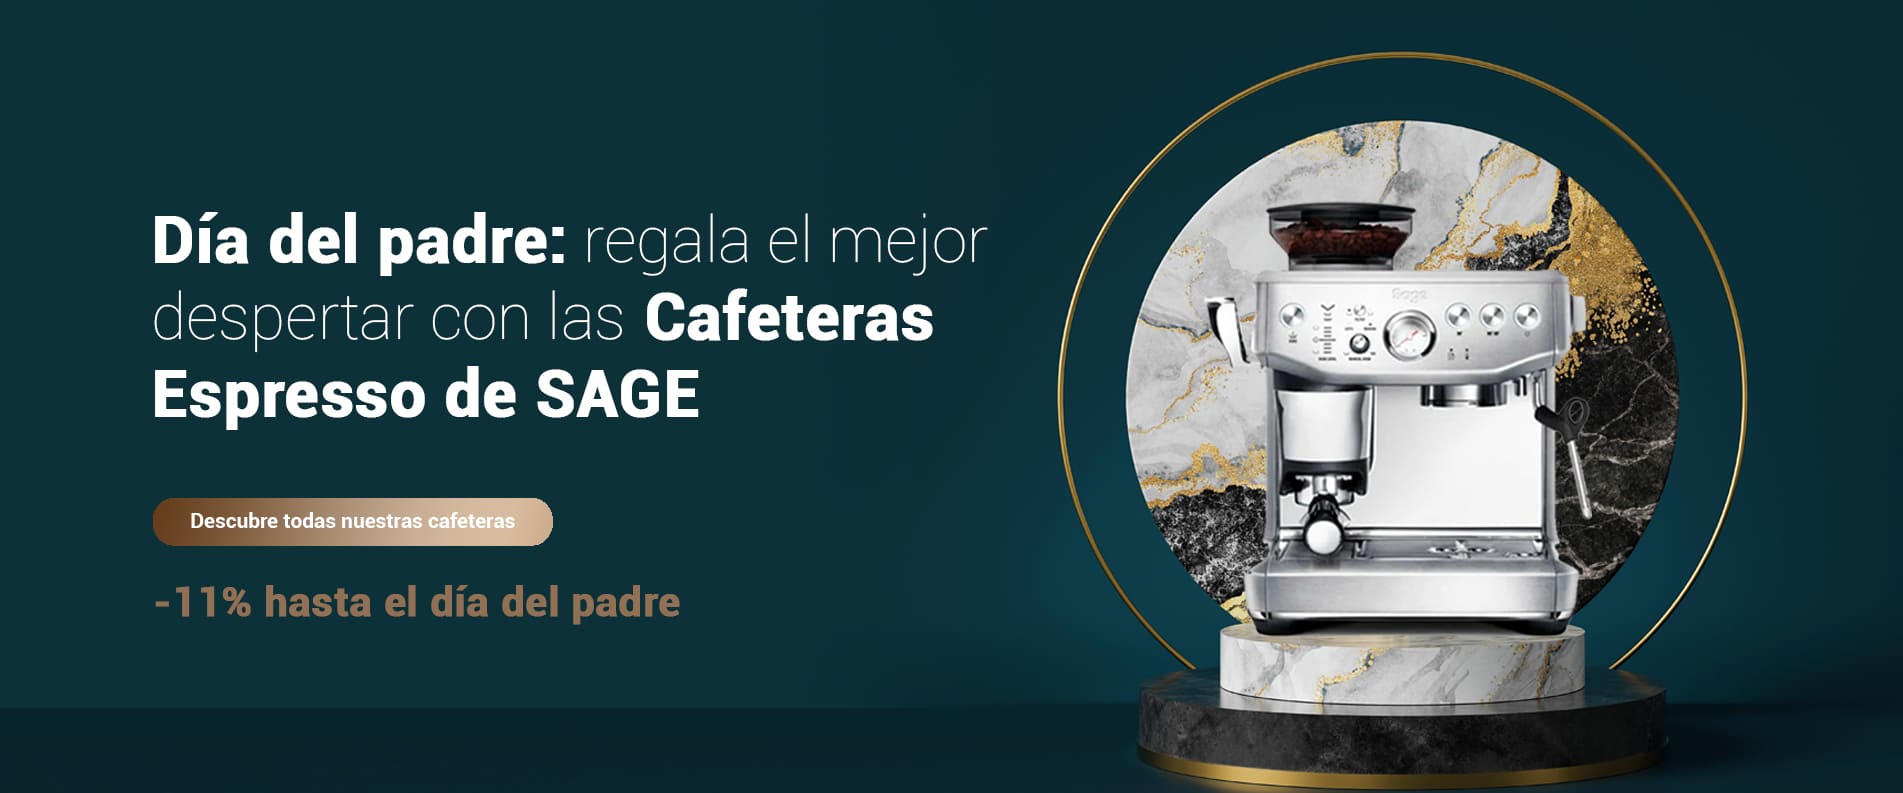 Cafetera Espresso SAGE the Barista Express Impress